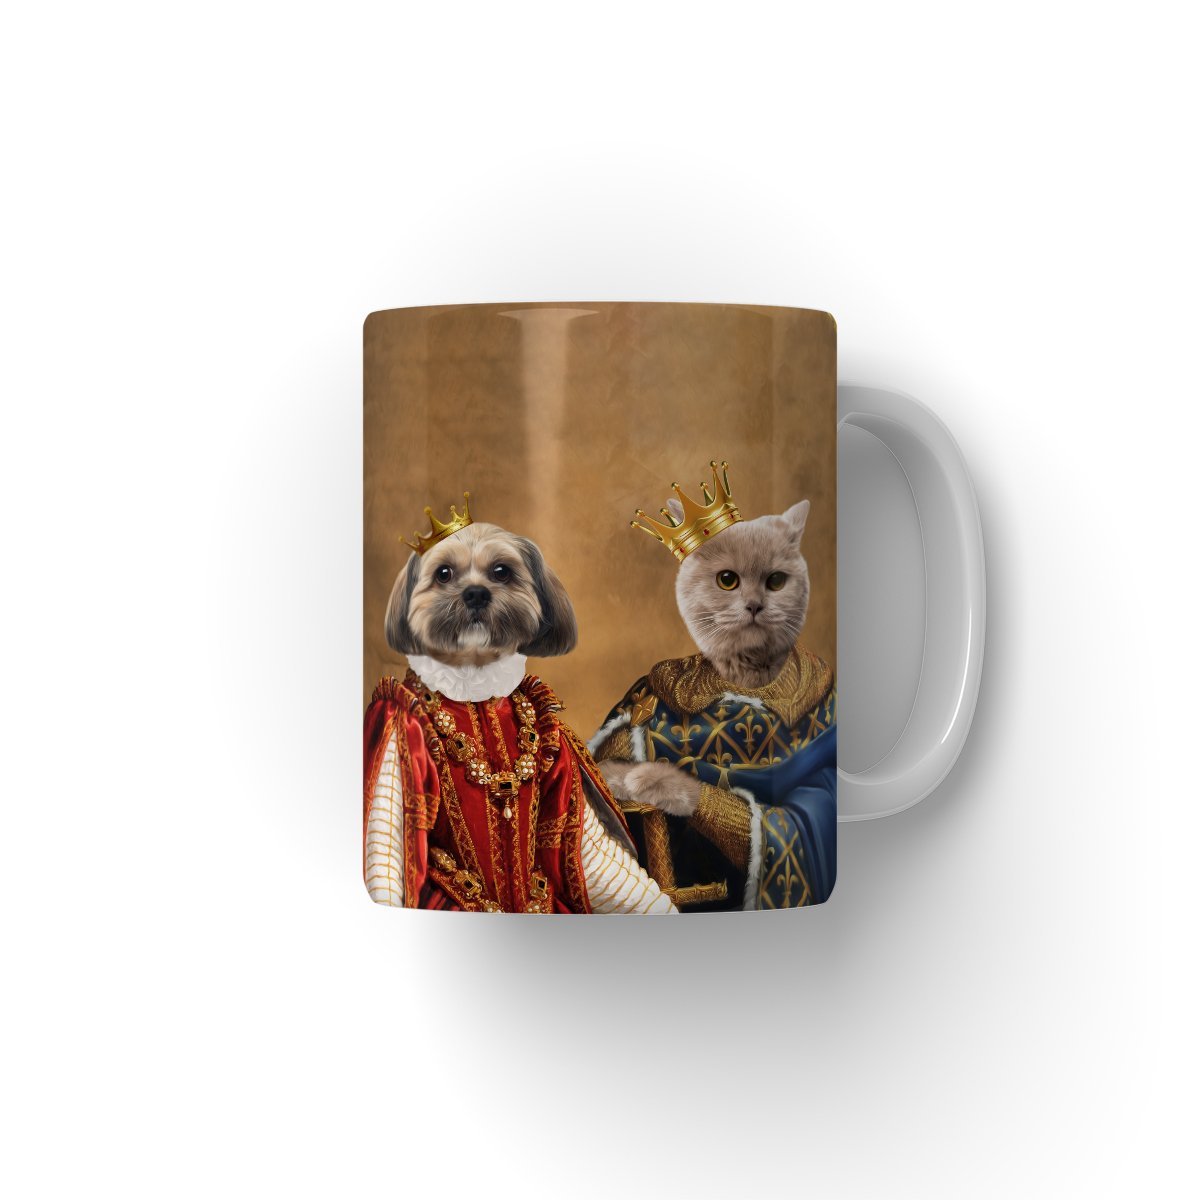 The King & Queen: Custom Pet Mug - Paw & Glory - #pet portraits# - #dog portraits# - #pet portraits uk#paw and glory, custom pet portrait Mug,cute dog mugs, put your pet on a mug, cat mug personalised, pet on a mug, mugs dog